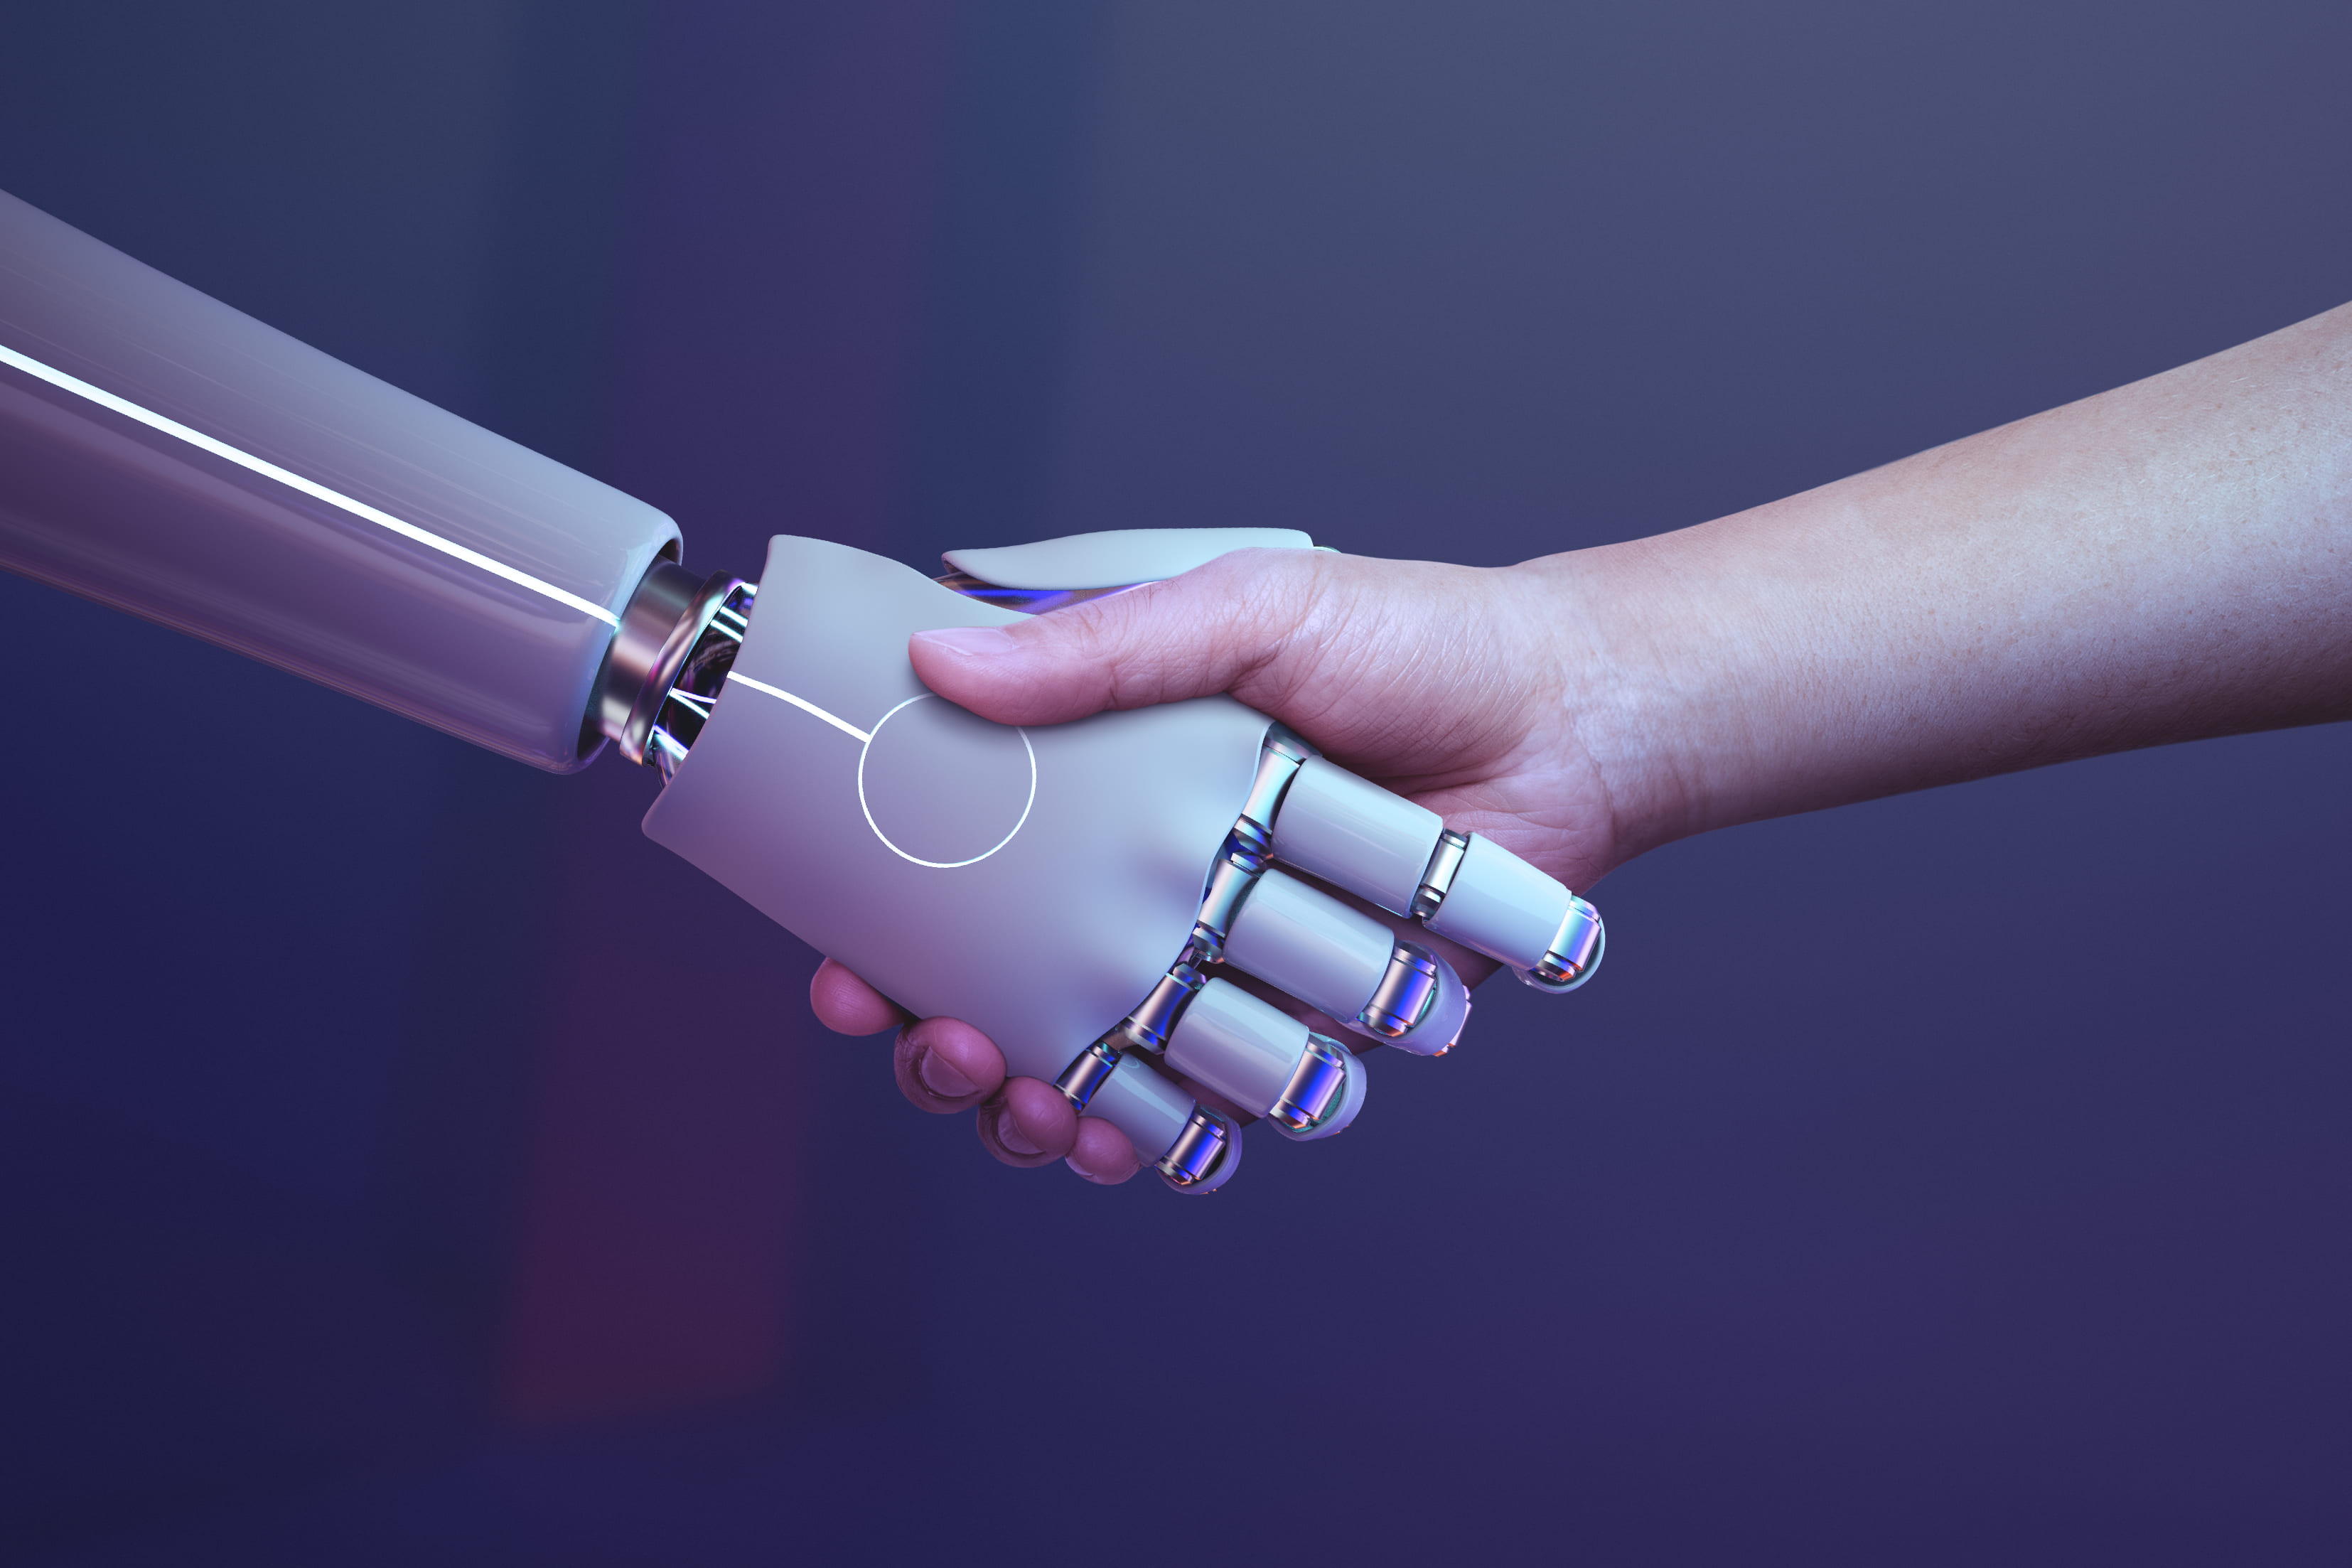 AI Robot Handshaking, and porcelain mug.